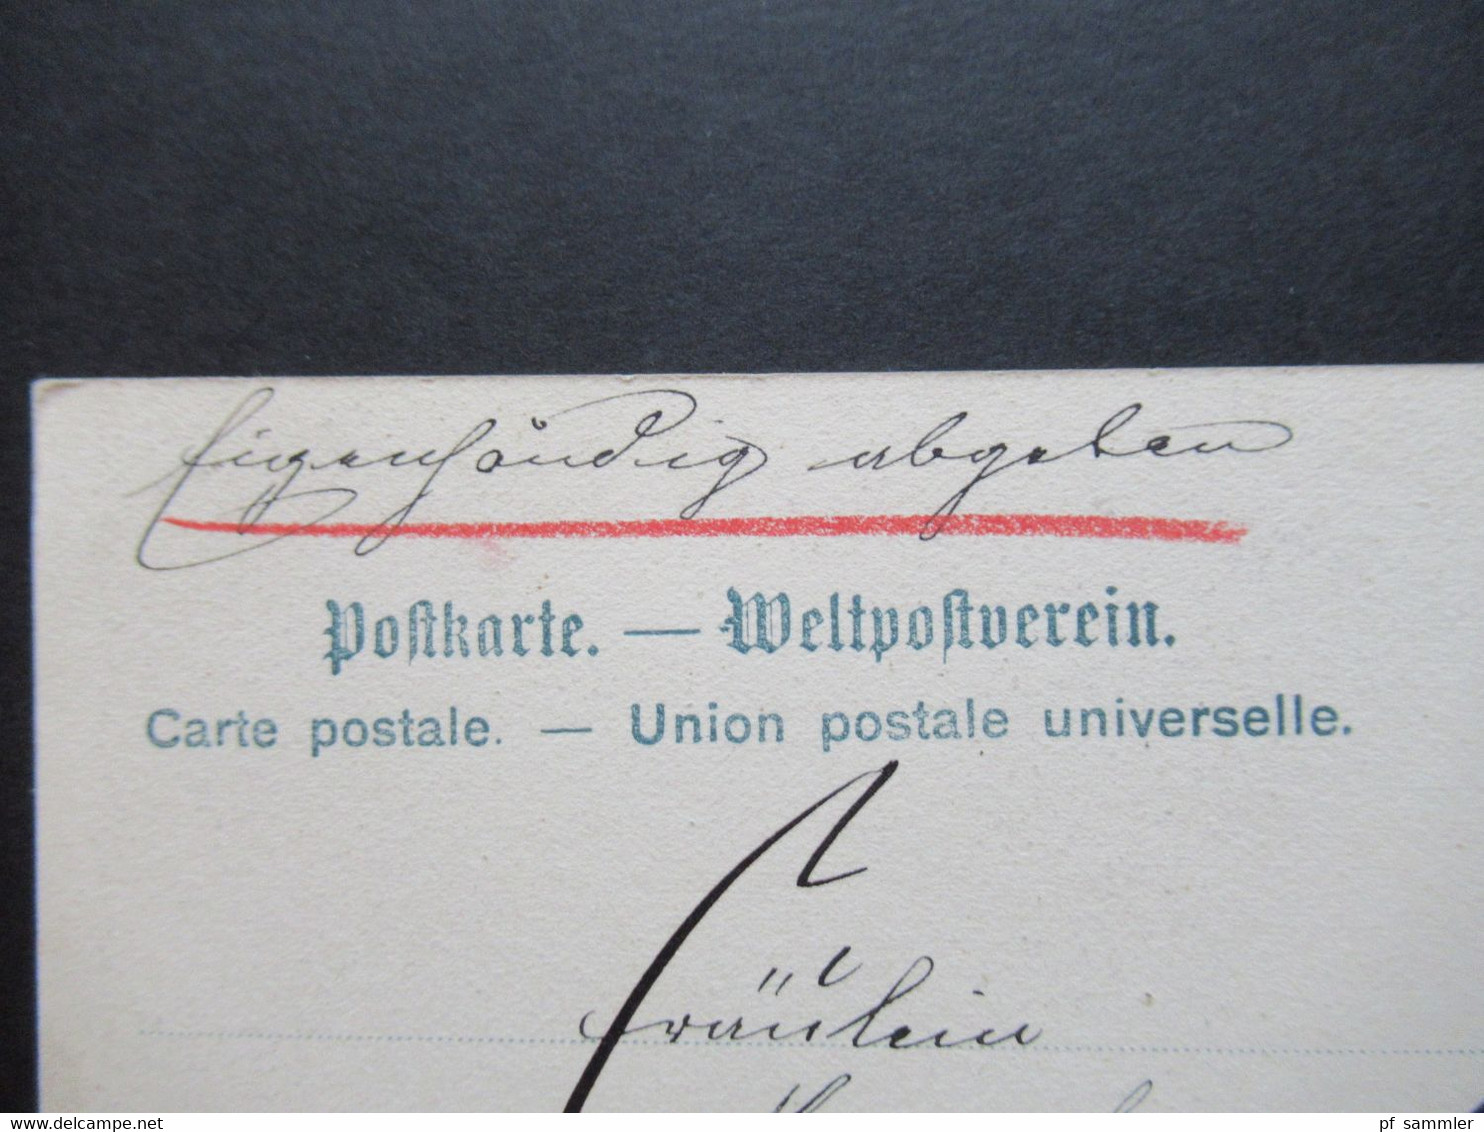 DR AK 1914 1903 Rezonville Stempel Metz und handschriftl Vermerk Eigenhändig abgegeben Stp. Braunschweig Ankunft